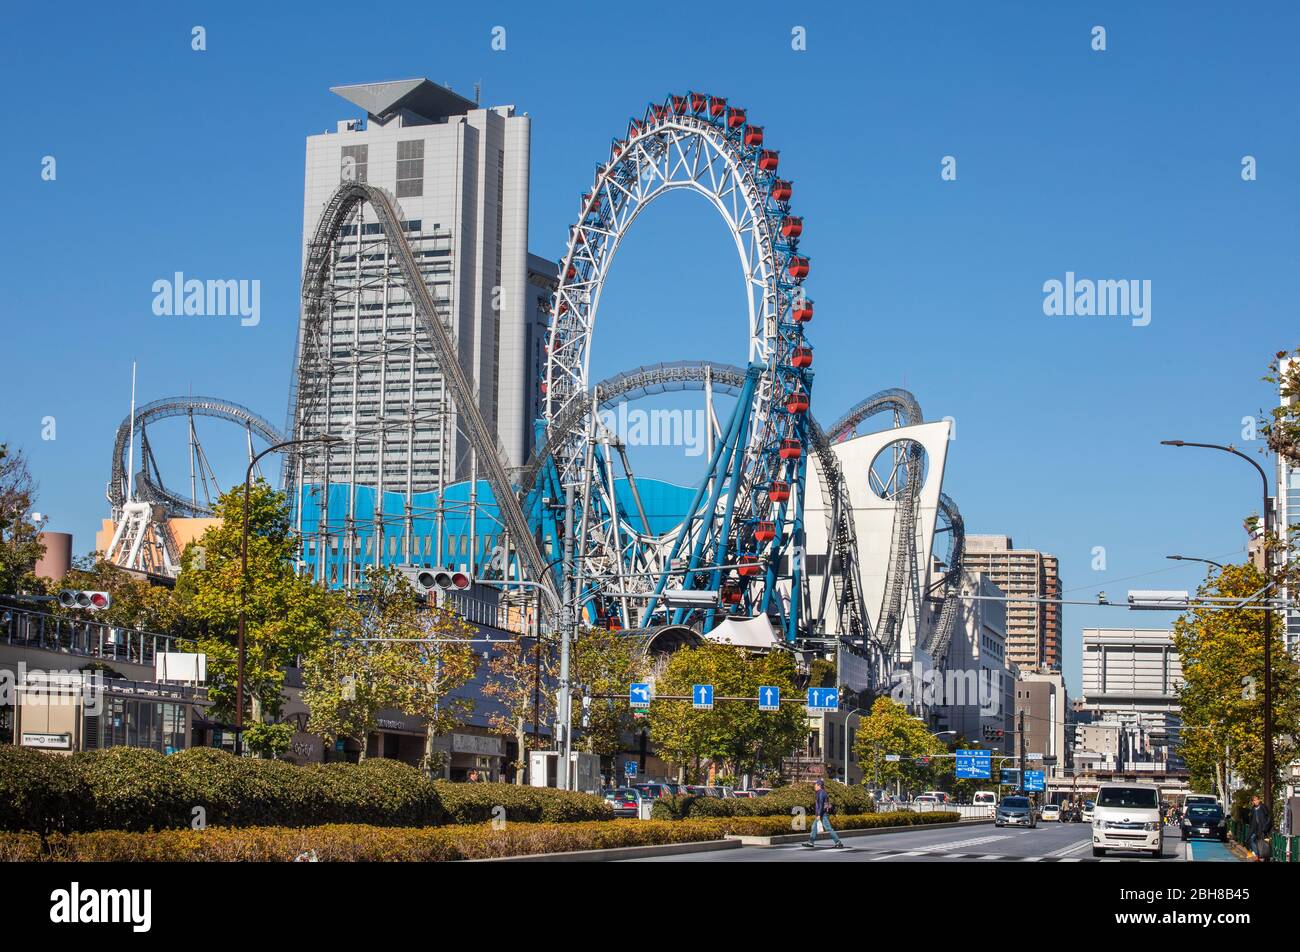 Japan, Tokyo City, Bunkyo District, Korakuen entertainment area Stock Photo